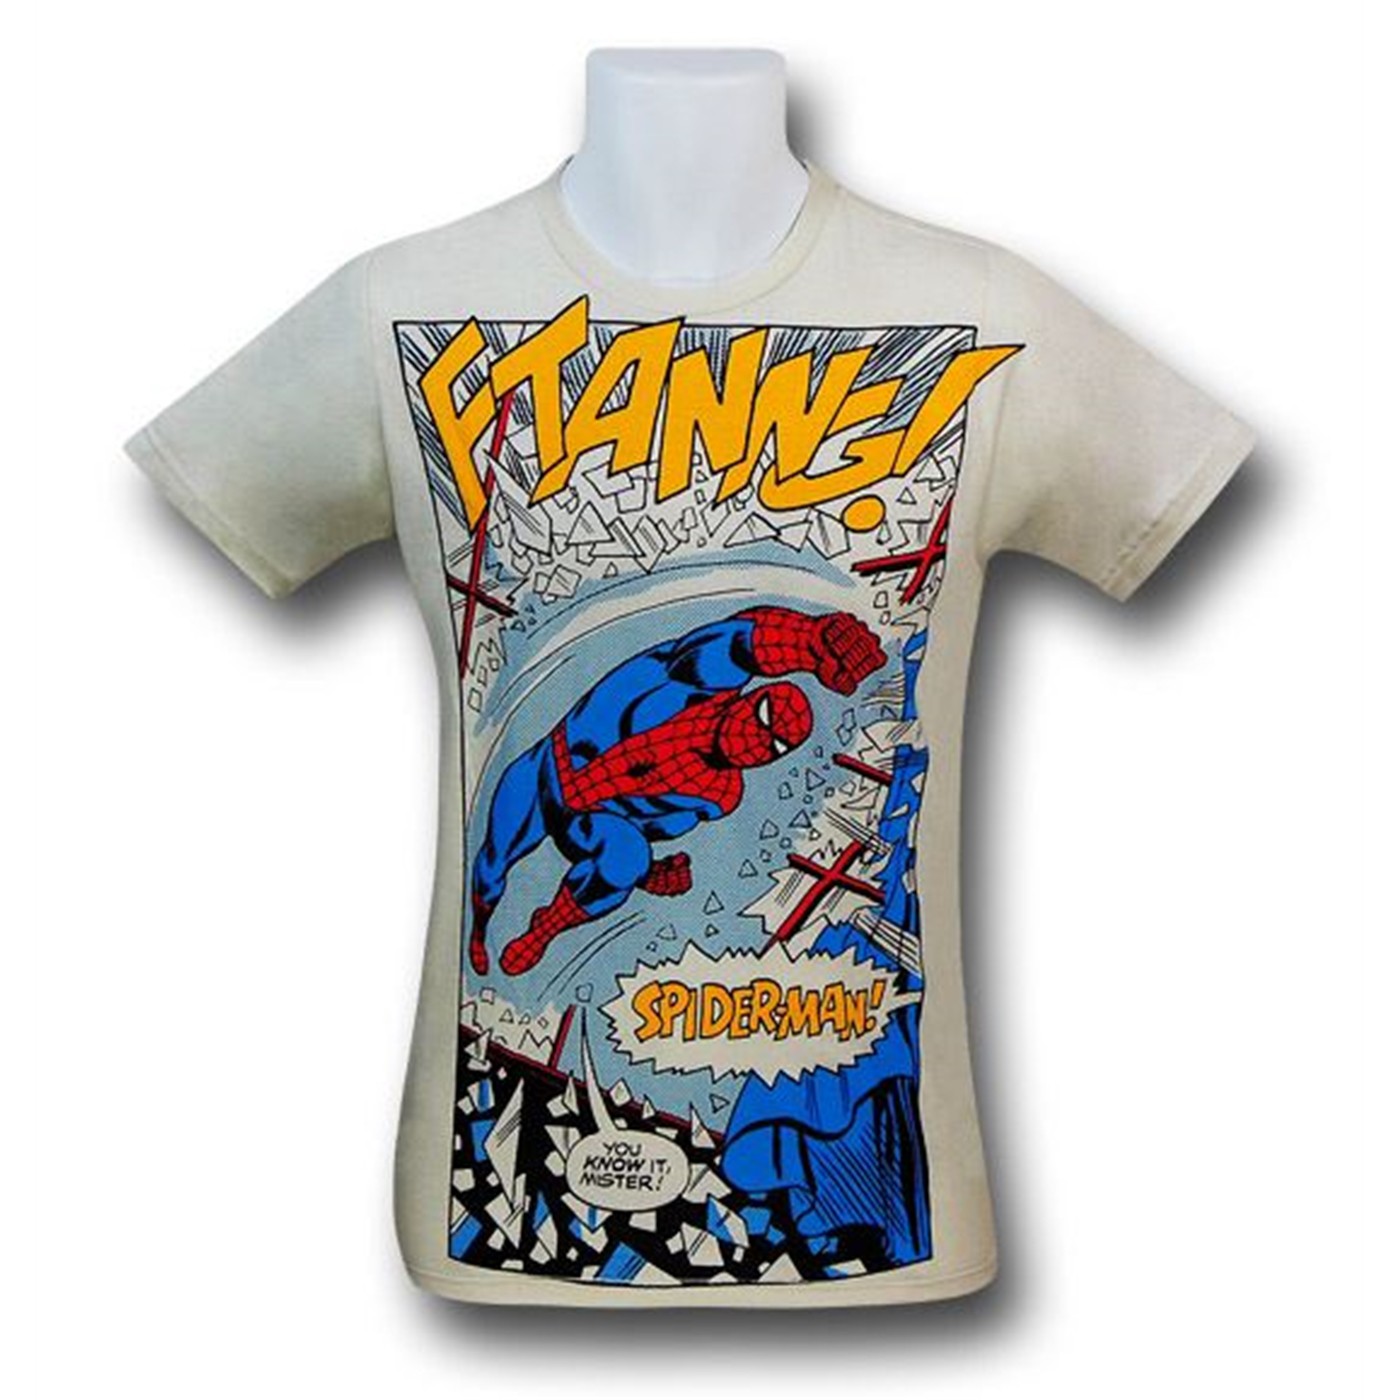 Spiderman FTANNG 30 Single T-Shirt